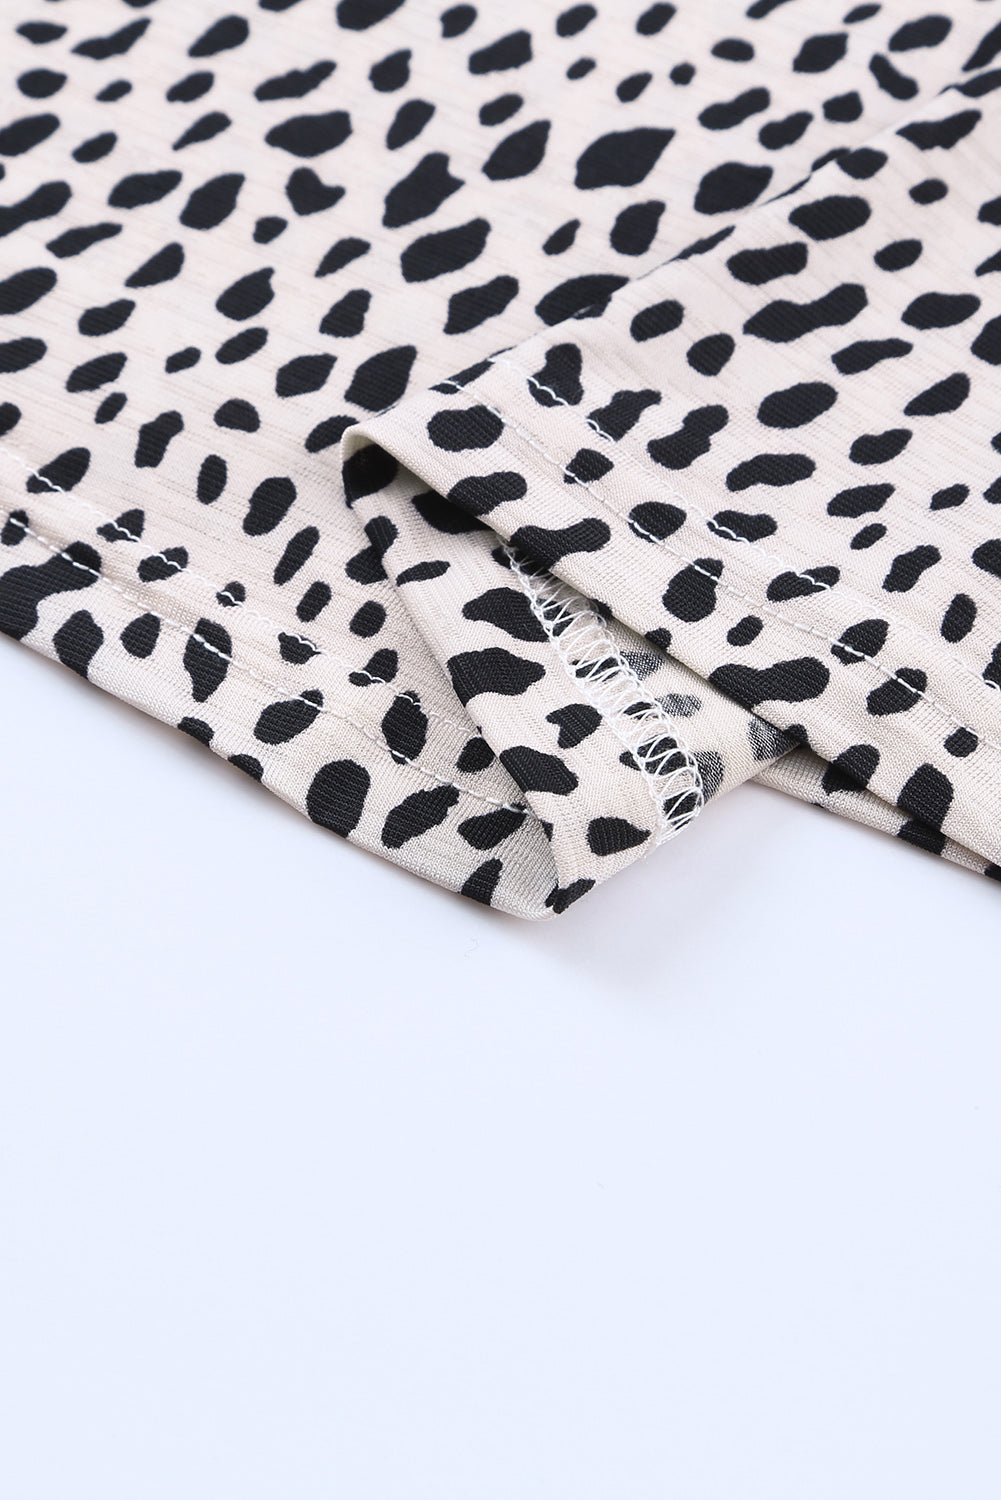 Leopard Print Round Neck Tank Top Tank Tops JT's Designer Fashion